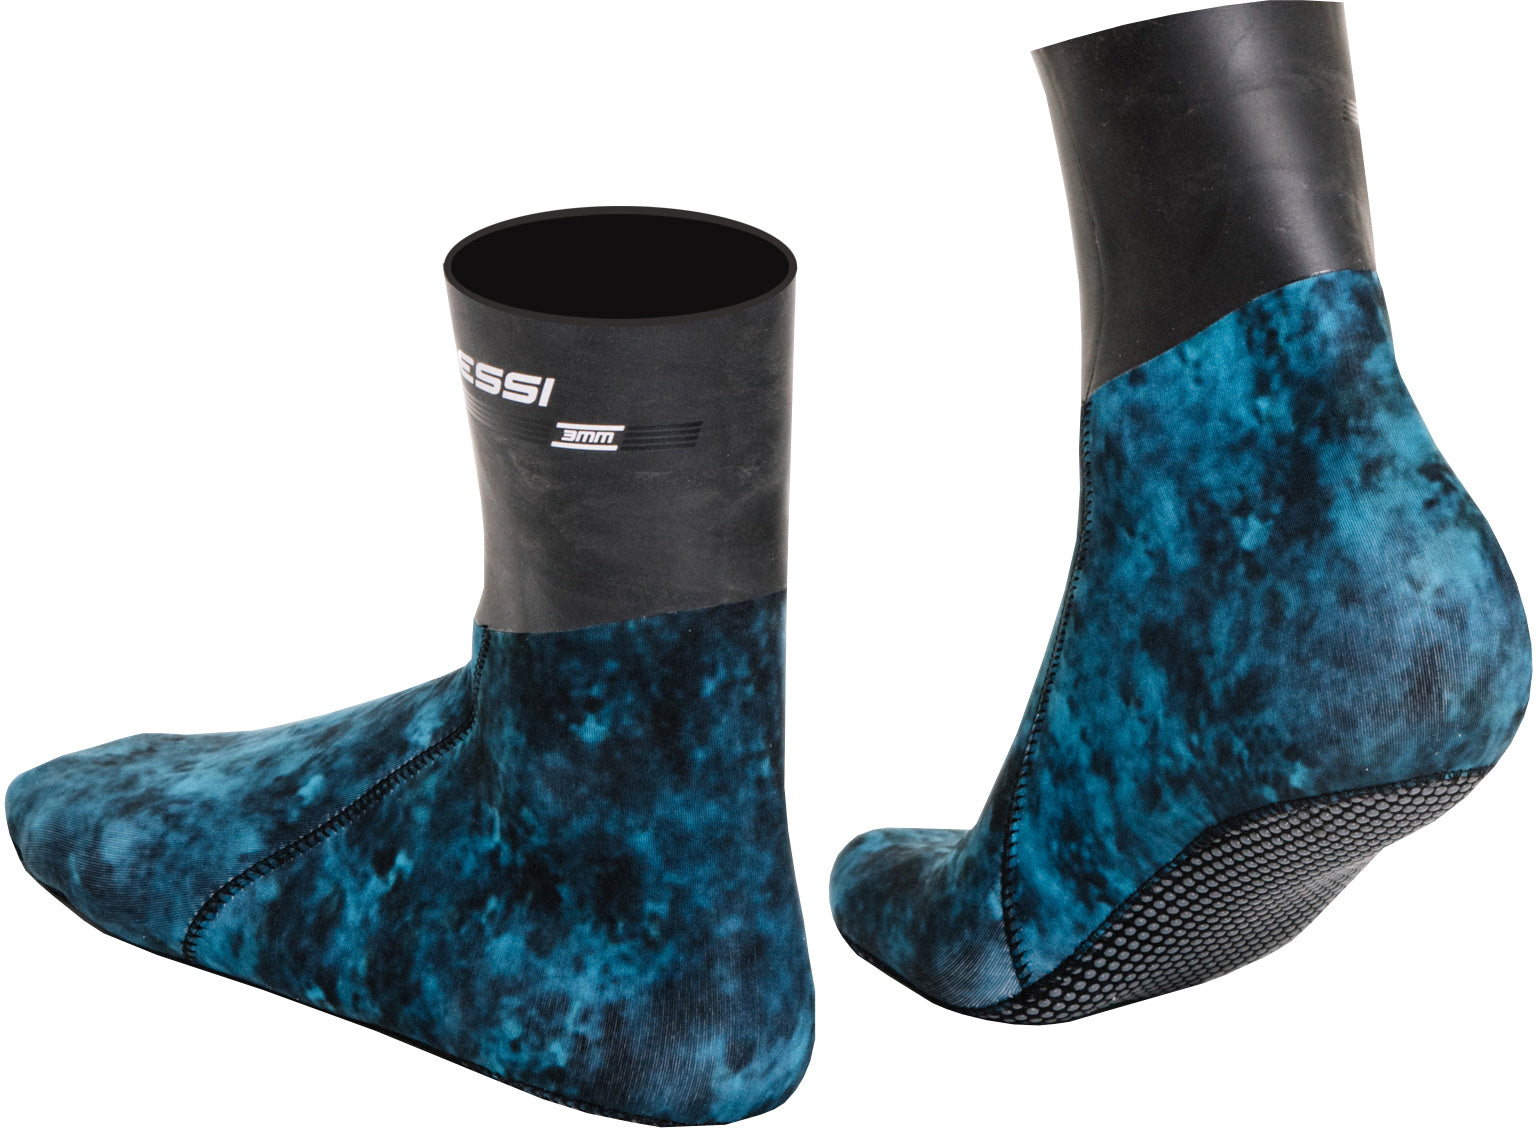 Cressi Sarago Camouflage Socks calzari pesca calzatur mute abbigliament calze spearfishing footwear neoprene wetsuit accessor socks